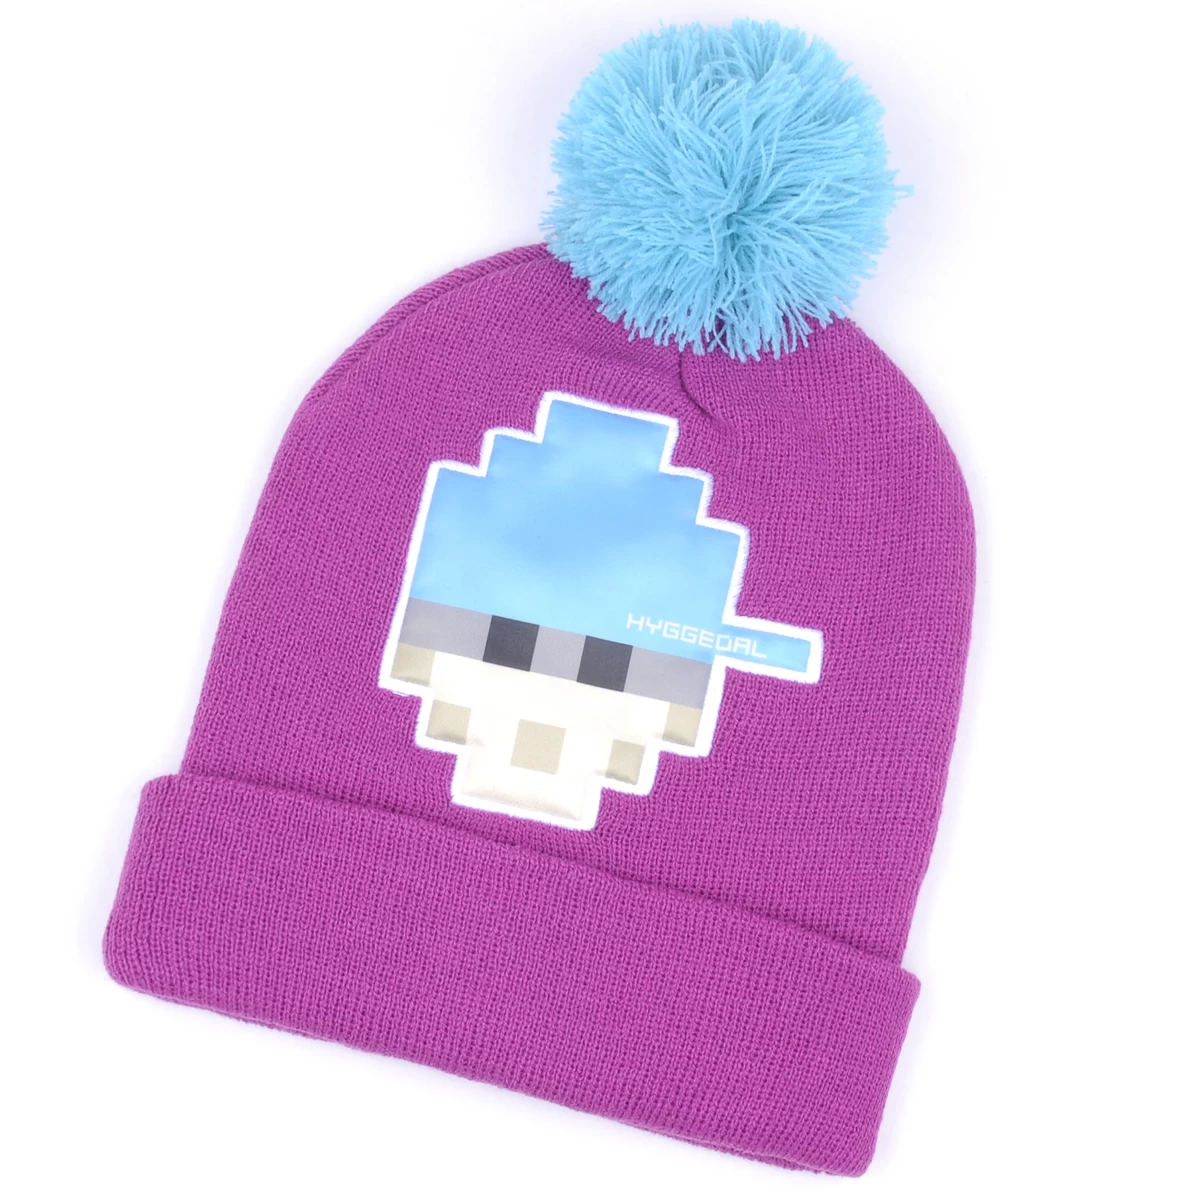 custom winter cap for baby boy